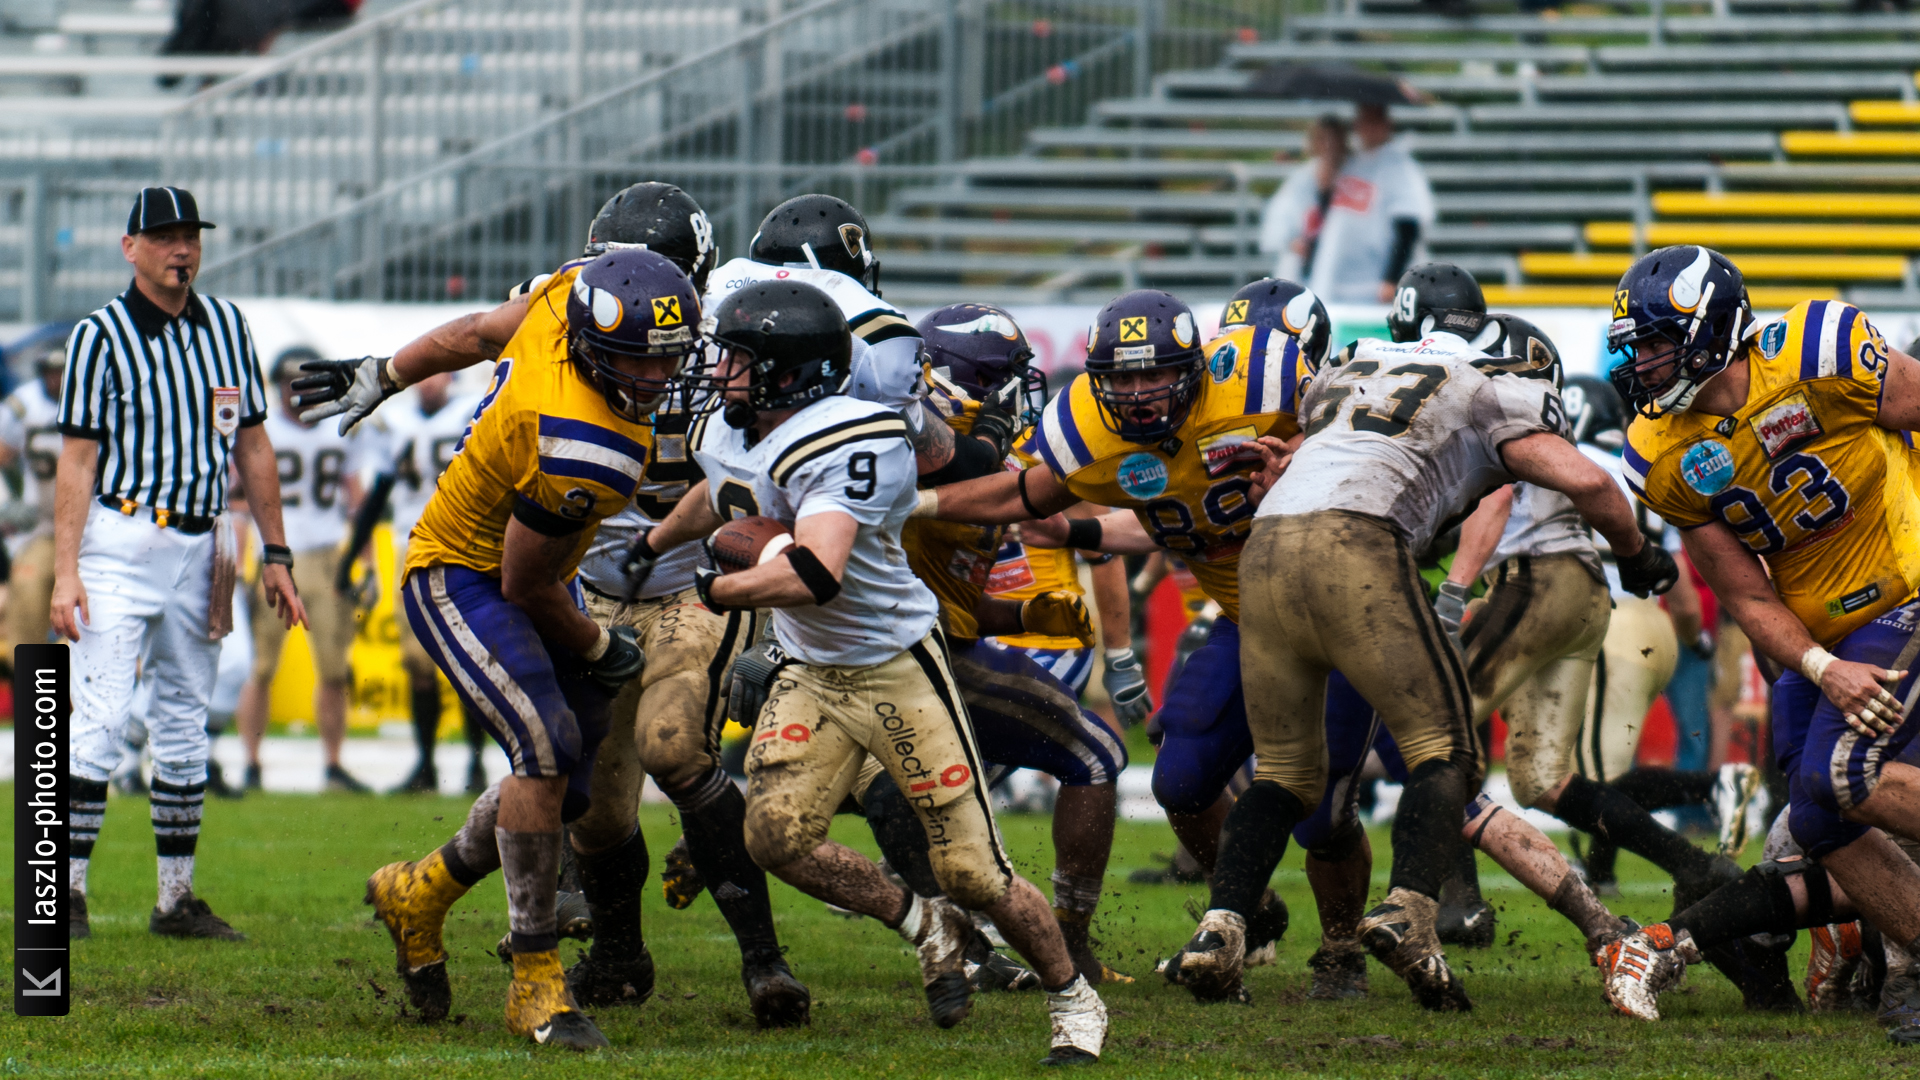 Vikings vs Panthers 20100523 27:0